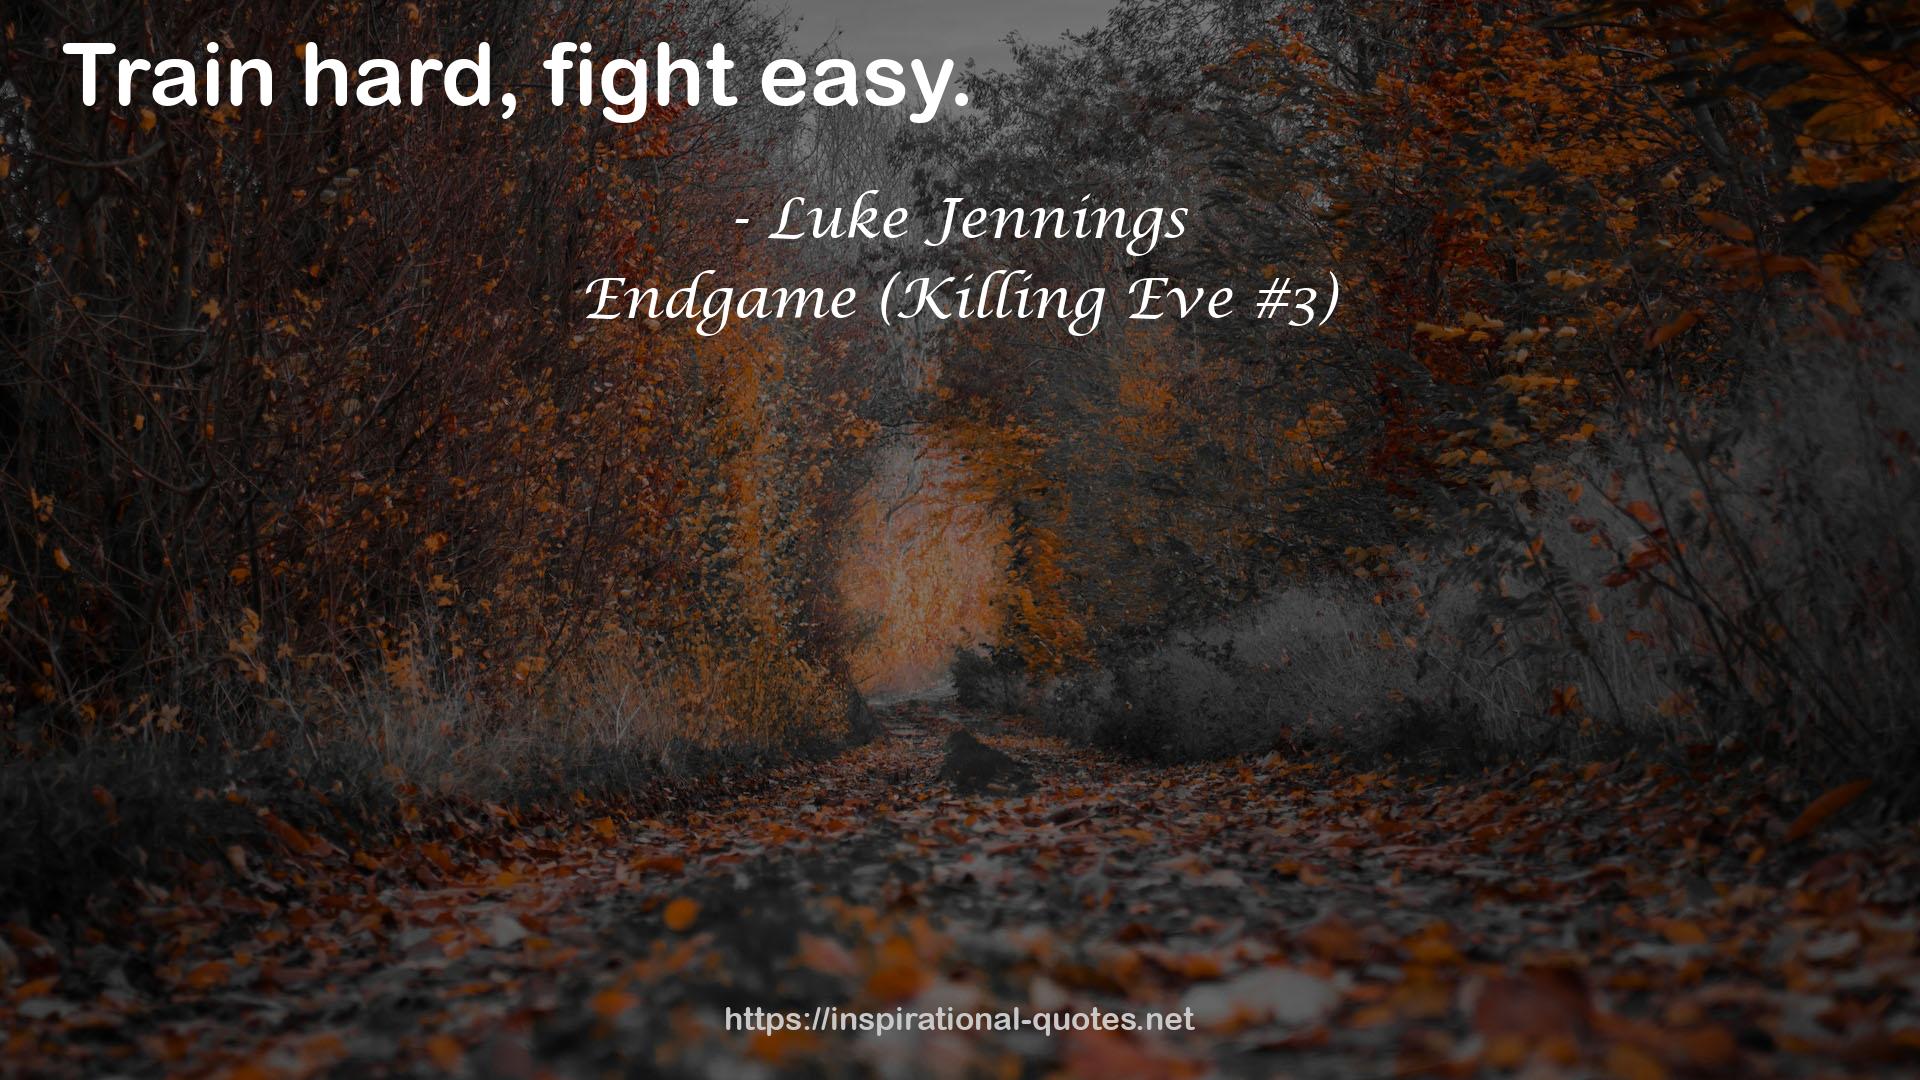 Endgame (Killing Eve #3) QUOTES